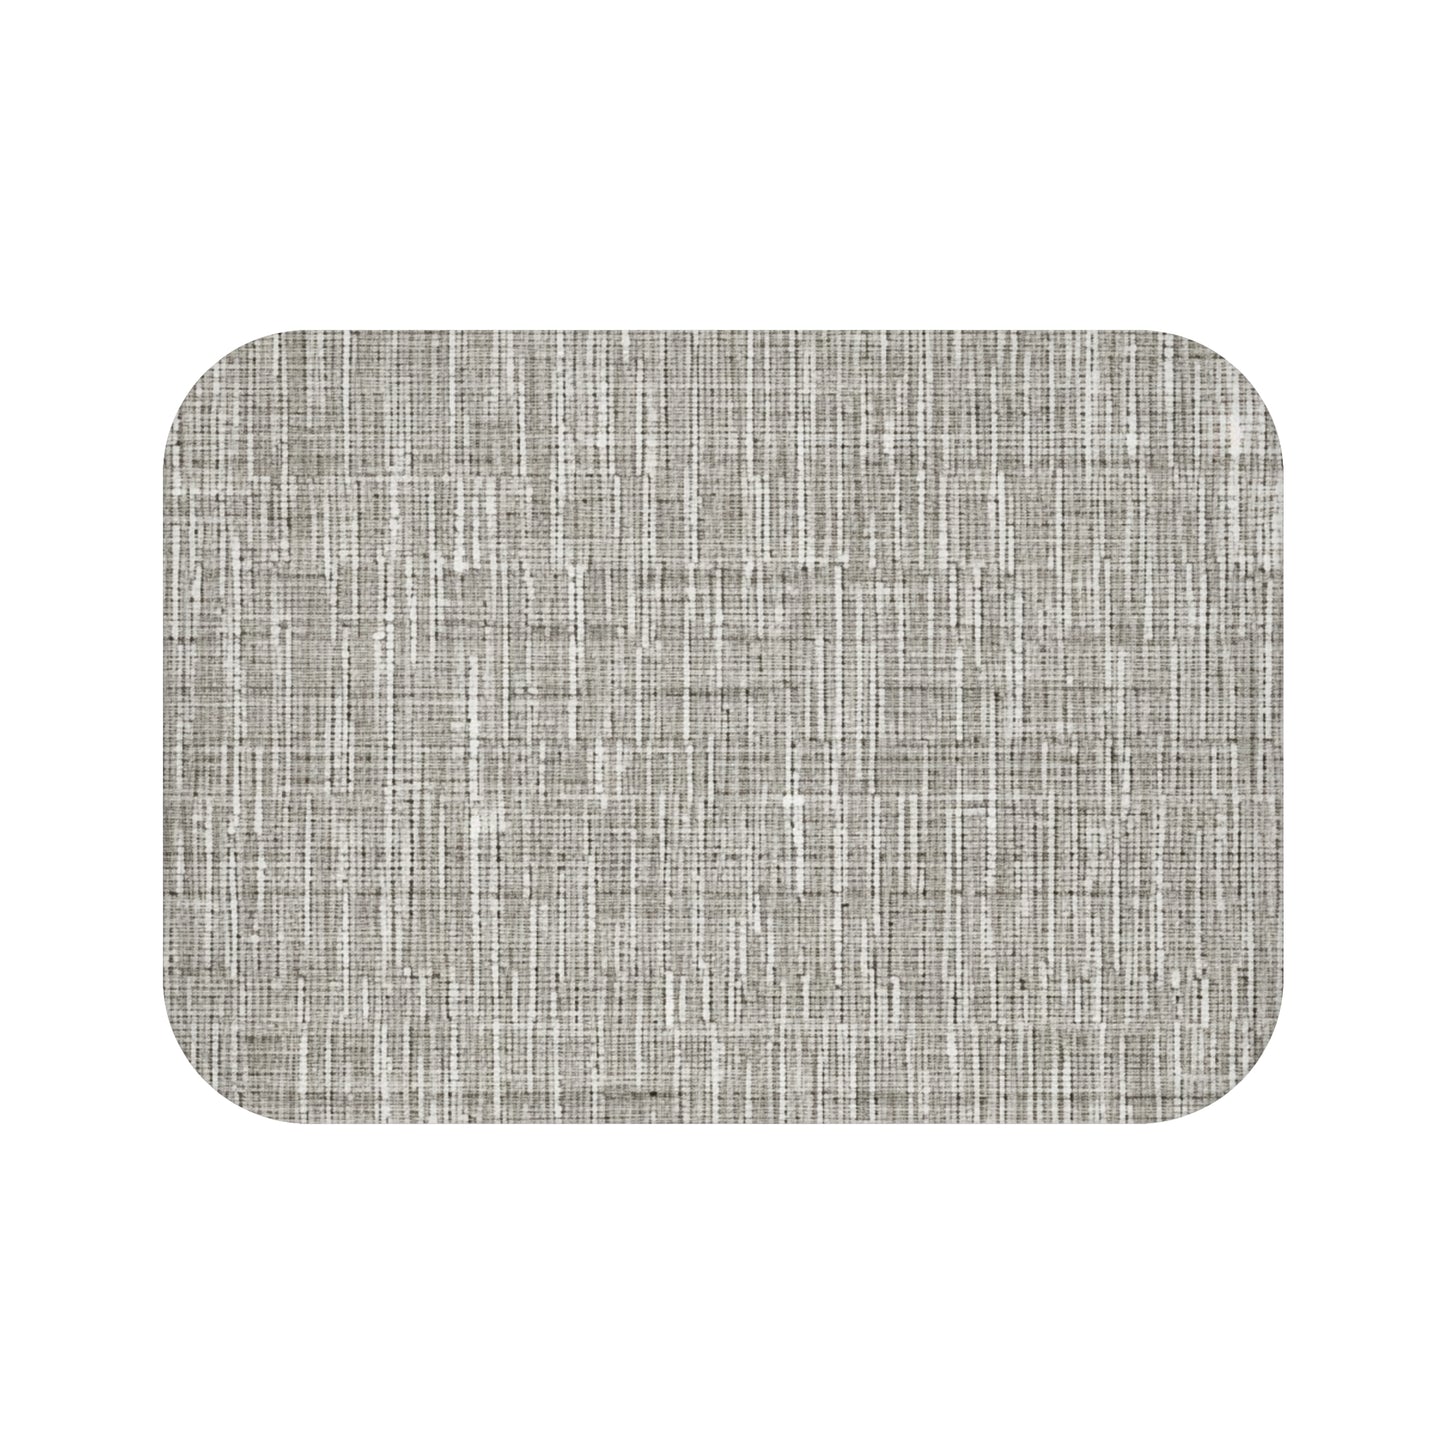 Silver Grey: Denim-Inspired, Contemporary Fabric Design - Bath Mat